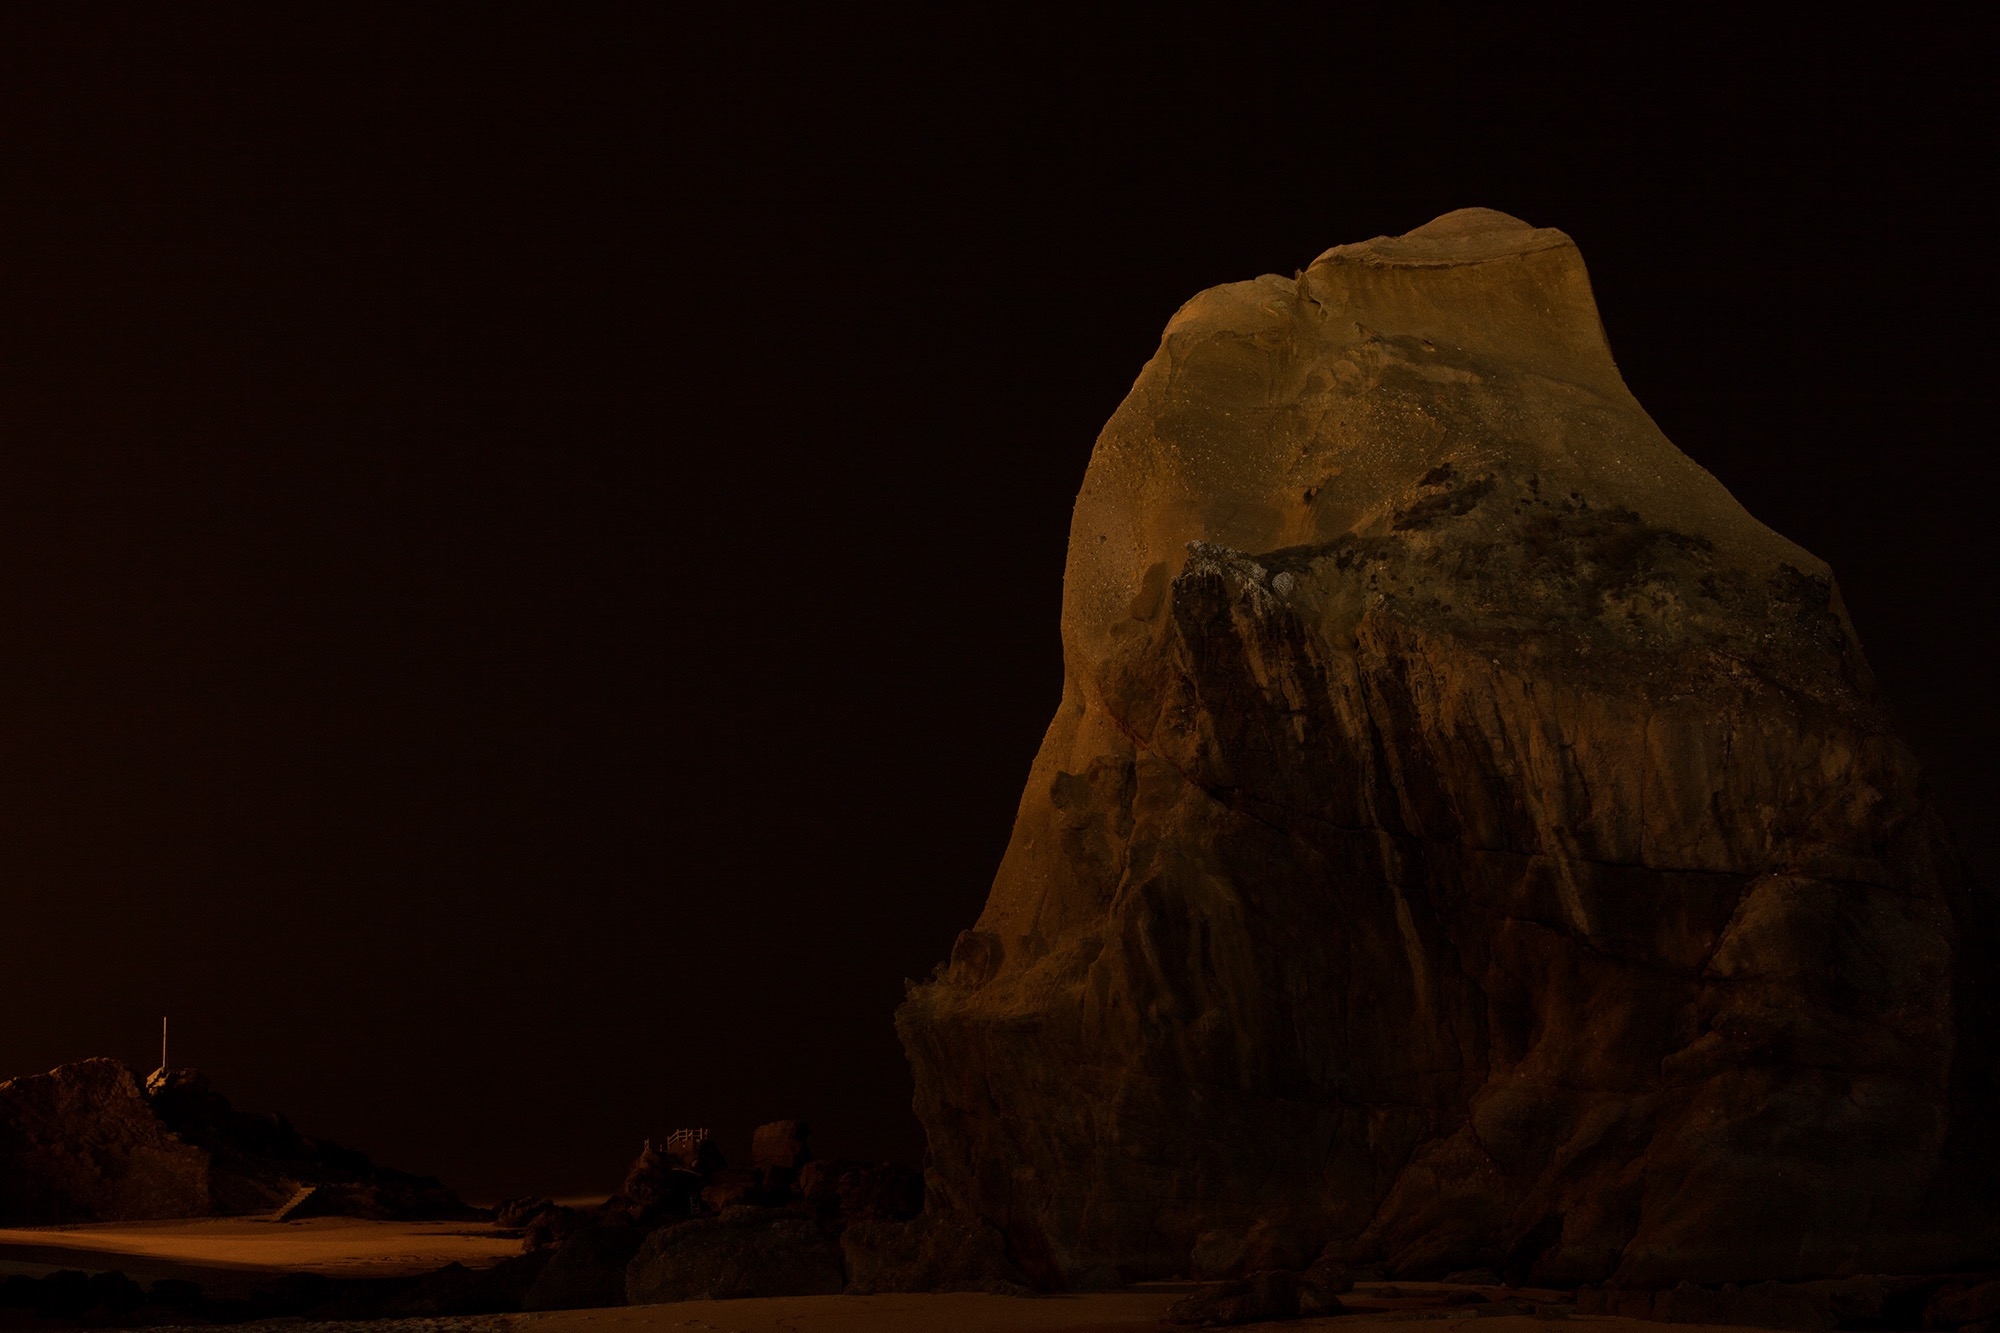 Carina Martins - We wander in circles through the night and are consumed by fire - Guincho Rock at Santa Cruz Beach